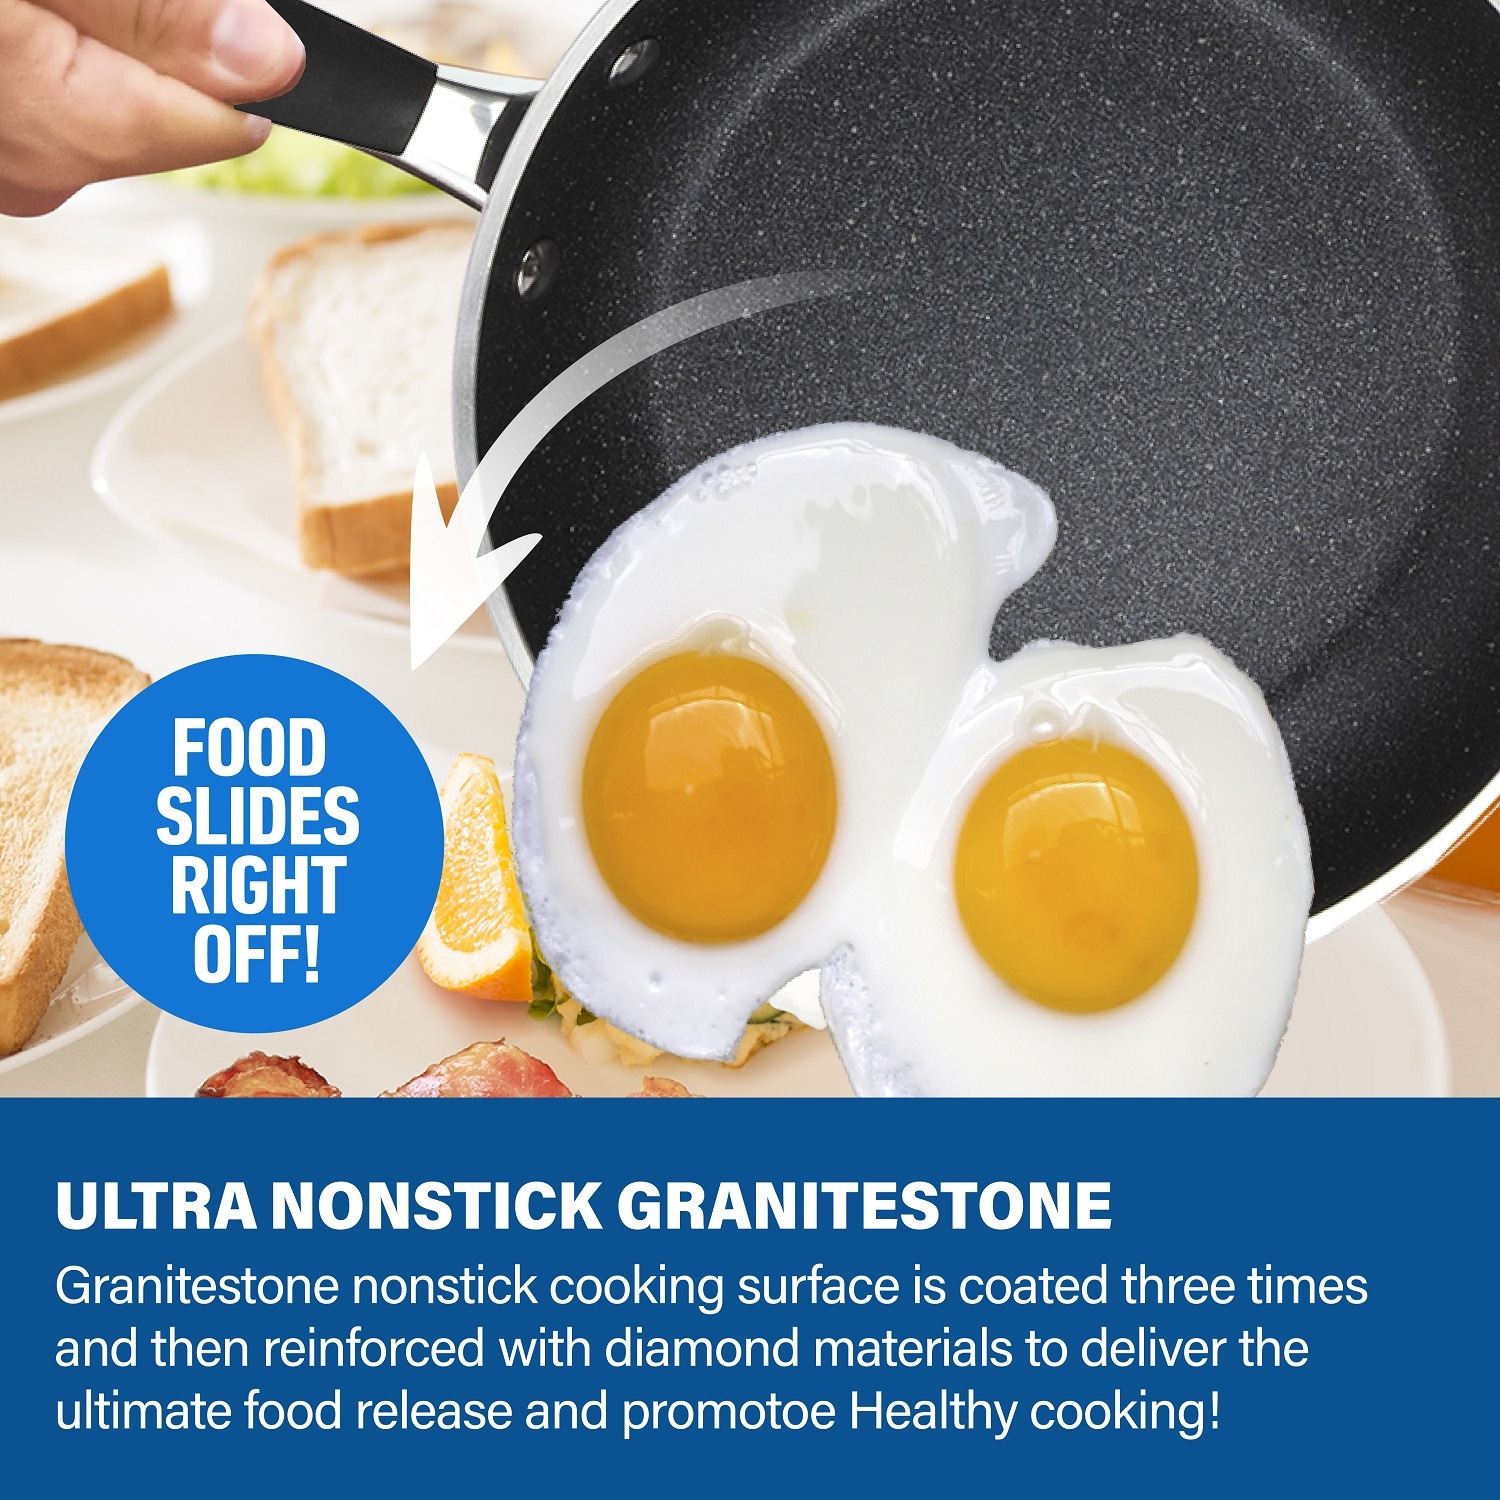 GraniteStone Classic Blue 14 Nonstick Frying Pan Diamond Triple